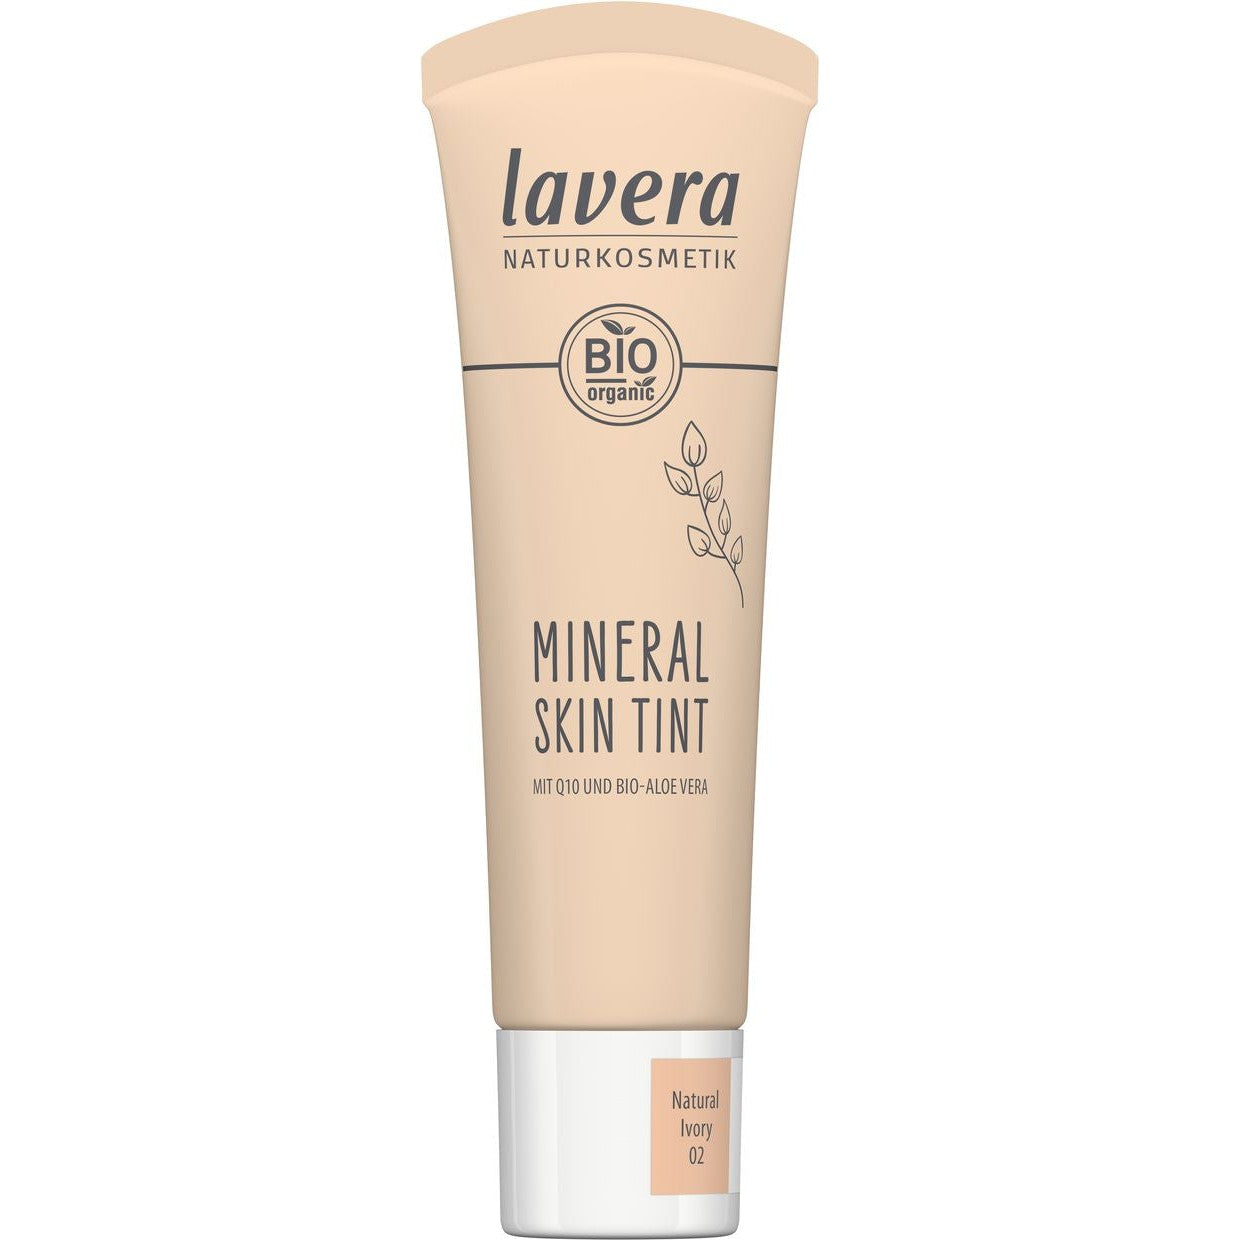 Lavera Mineral Skin Tint meikkivoide Natural Ivory 02